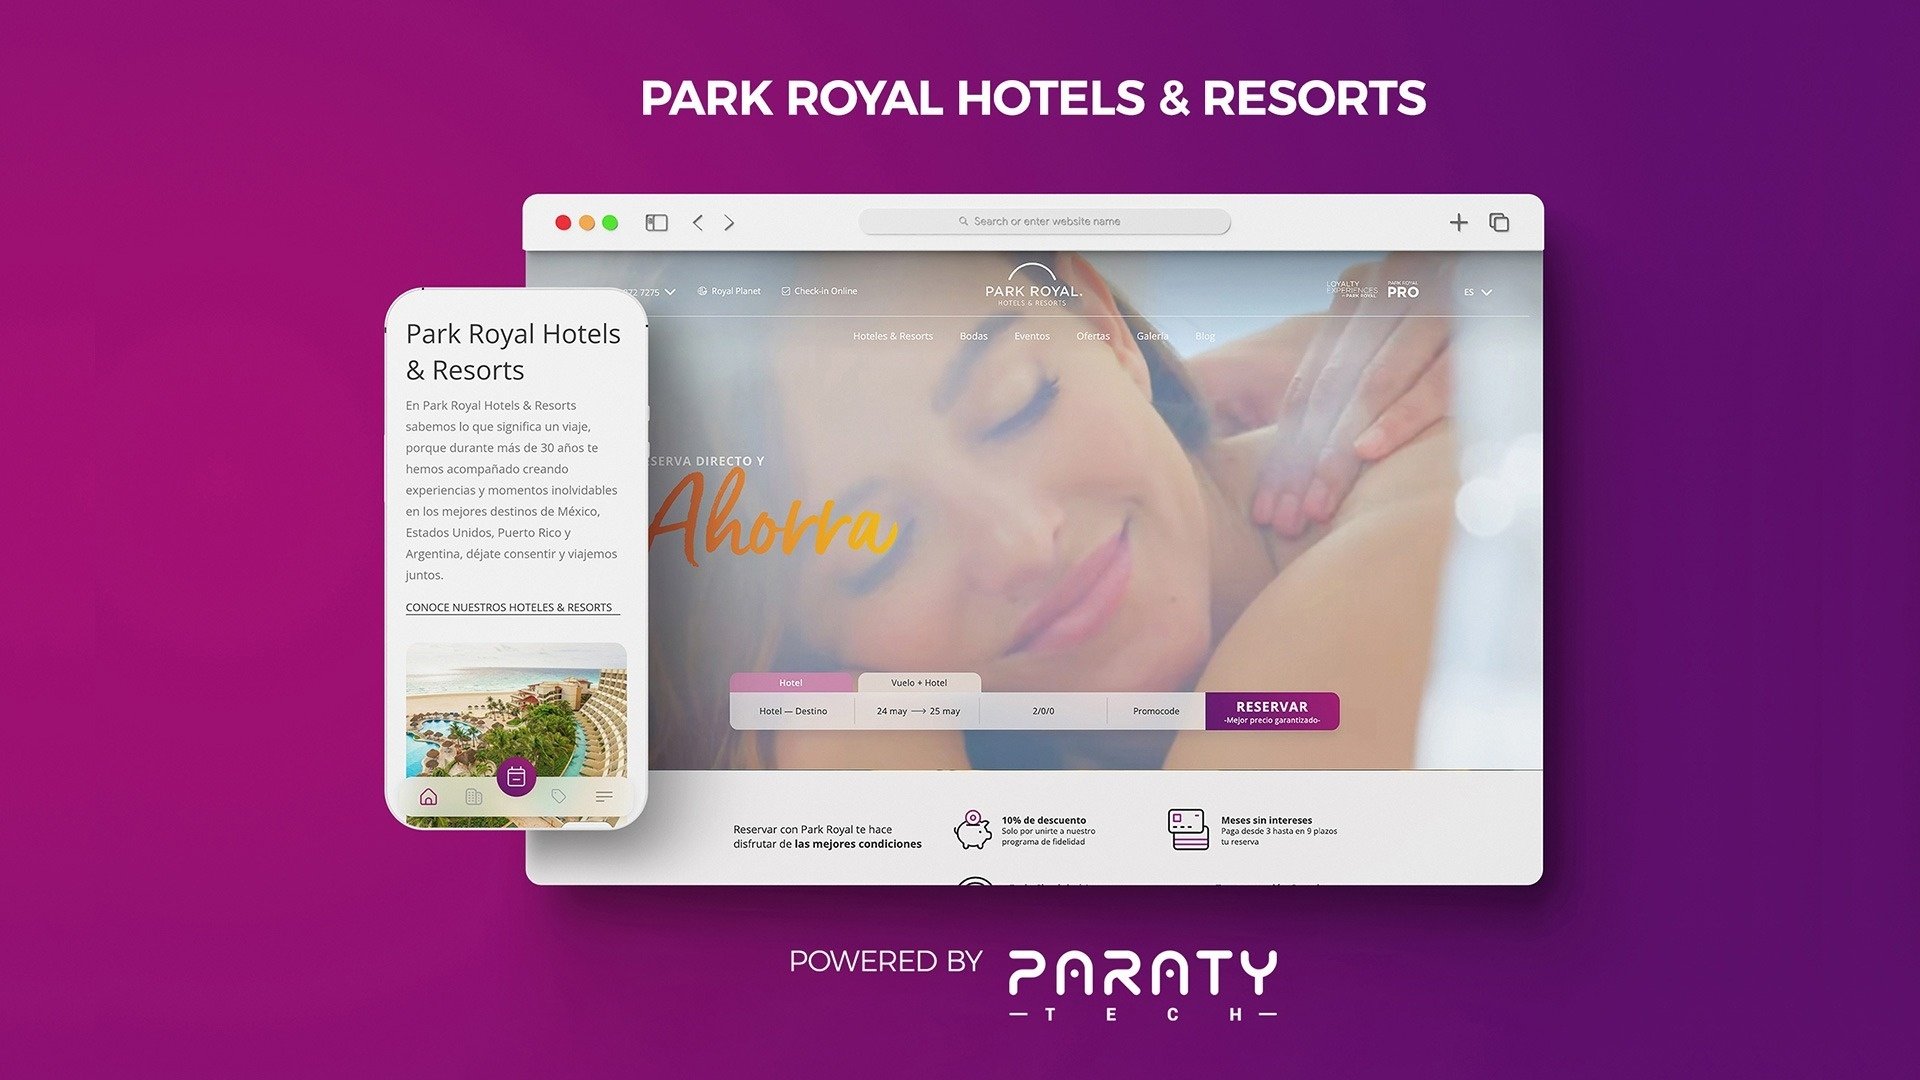 Park Royal Hotels & Resorts elige a Paraty Tech para potenciar su canal directo